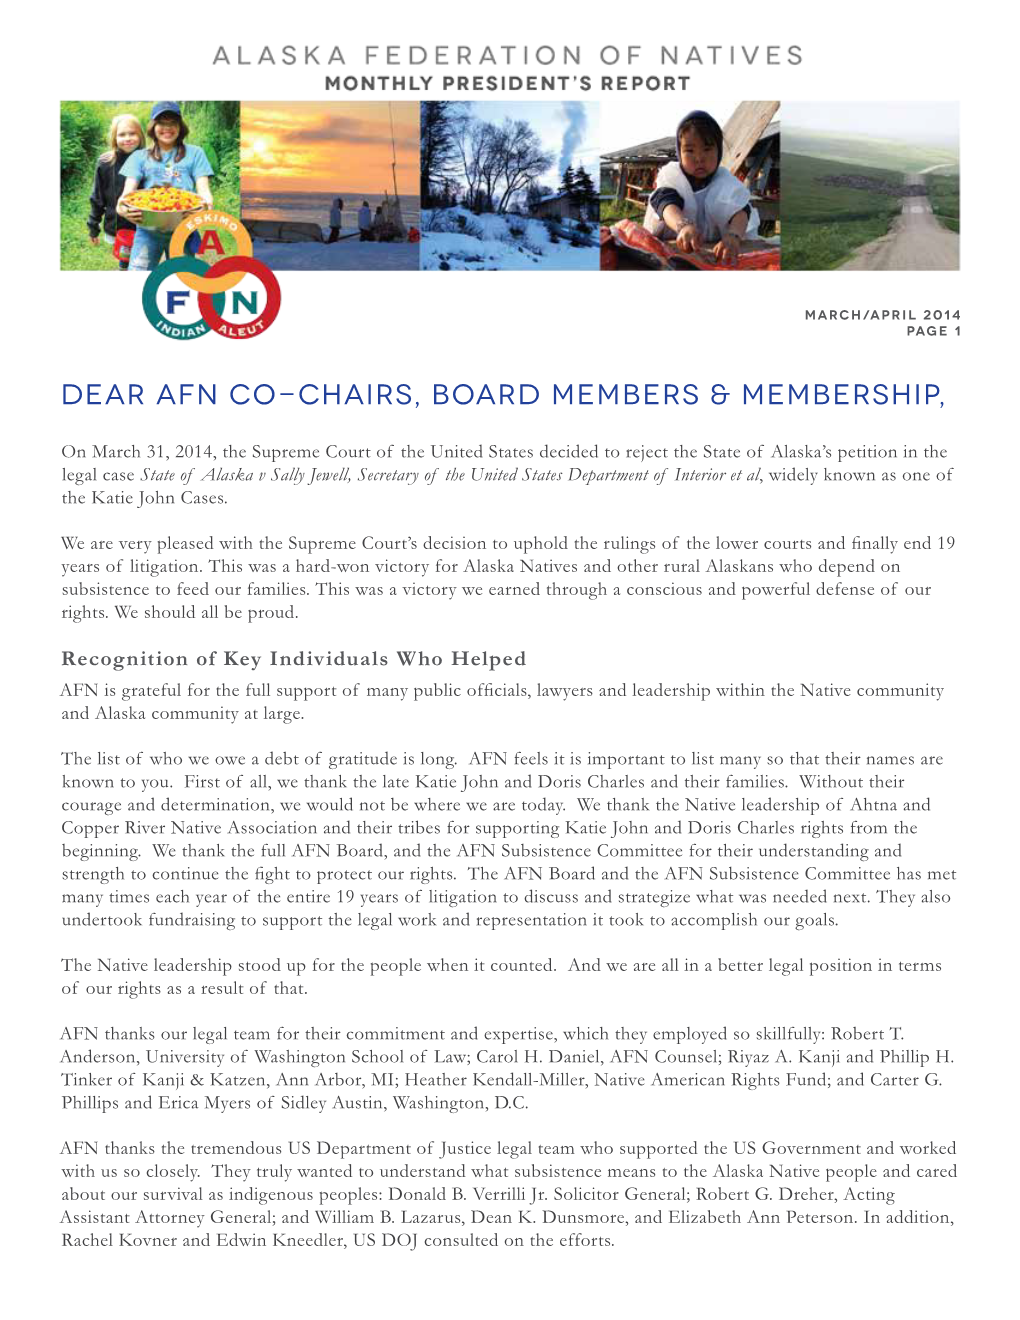 Dear AFN Co-Chairs, Board Members & Membership